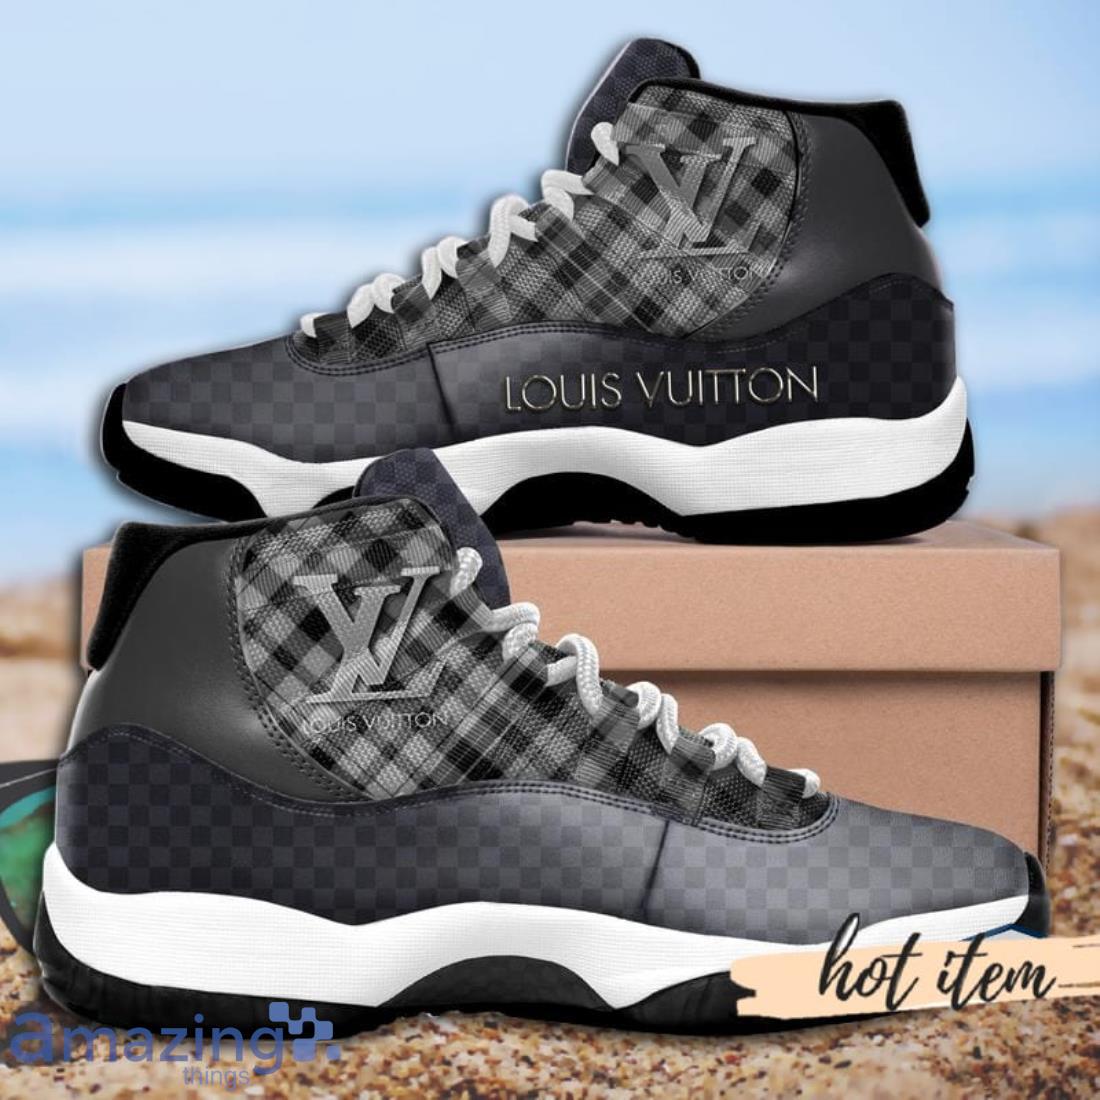 Louis Vuitton Basketball Air Jordan 13 Sneaker Shoes - Banantees